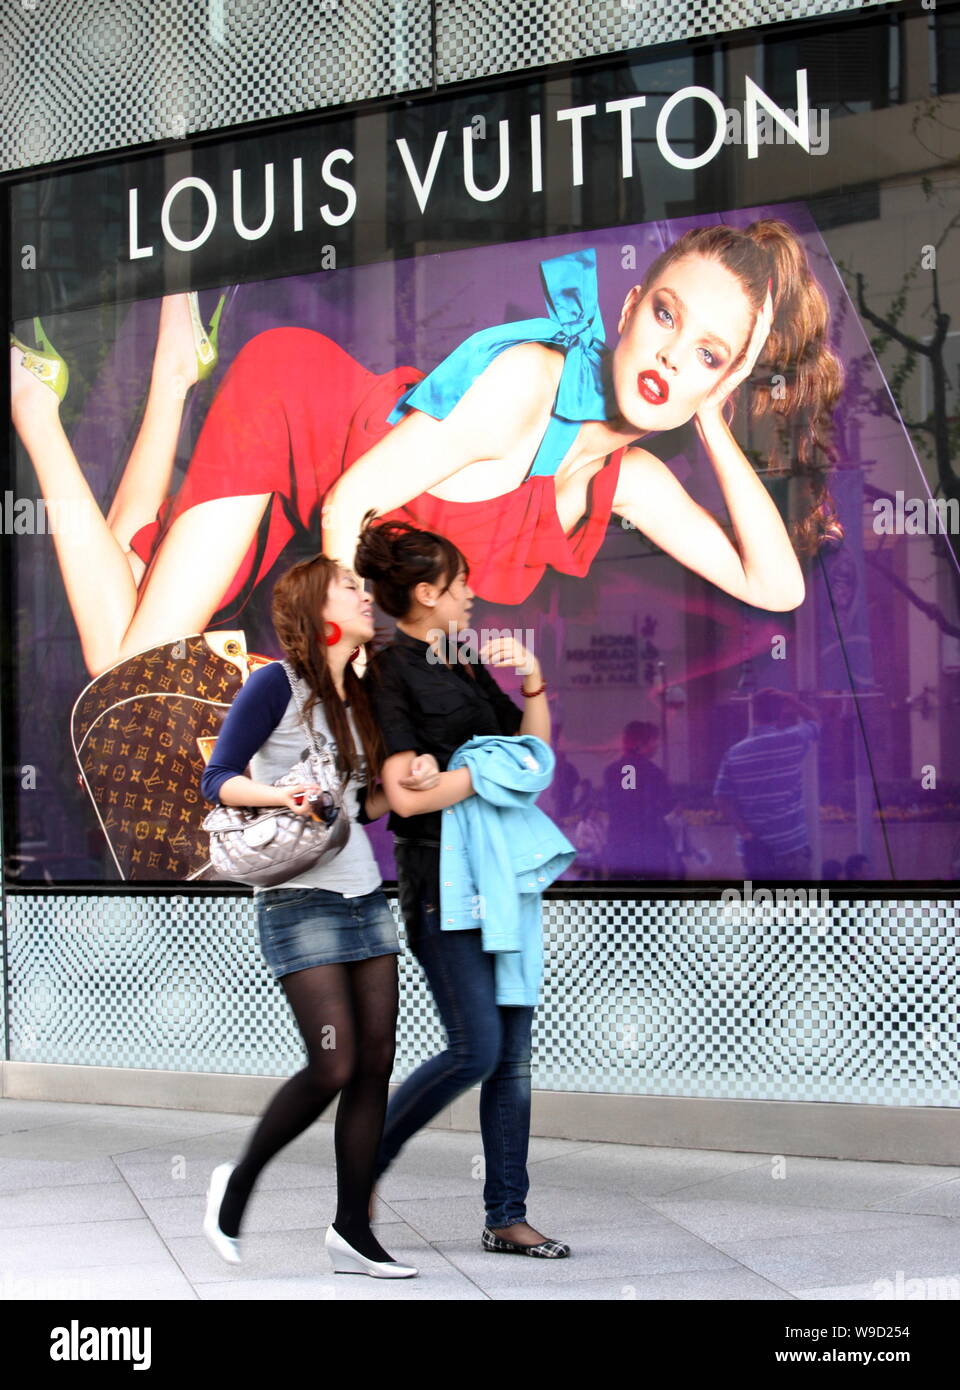 NEW Louis Vuitton Shanghai Exhibition, Women's Fashion, Bags